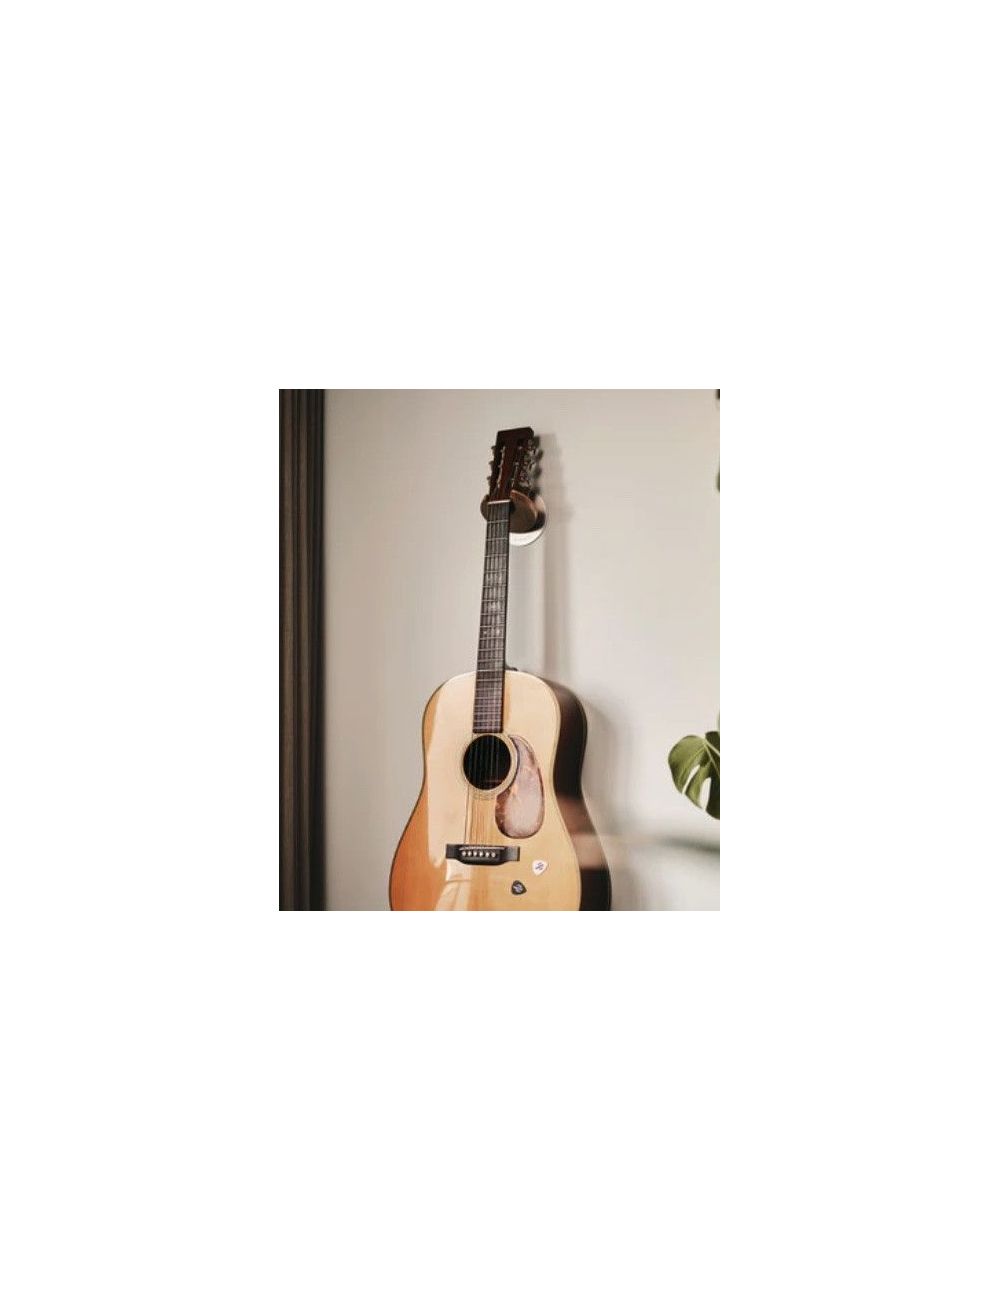 Openhagen HangWithMe Walnut guitar wall mount hanger